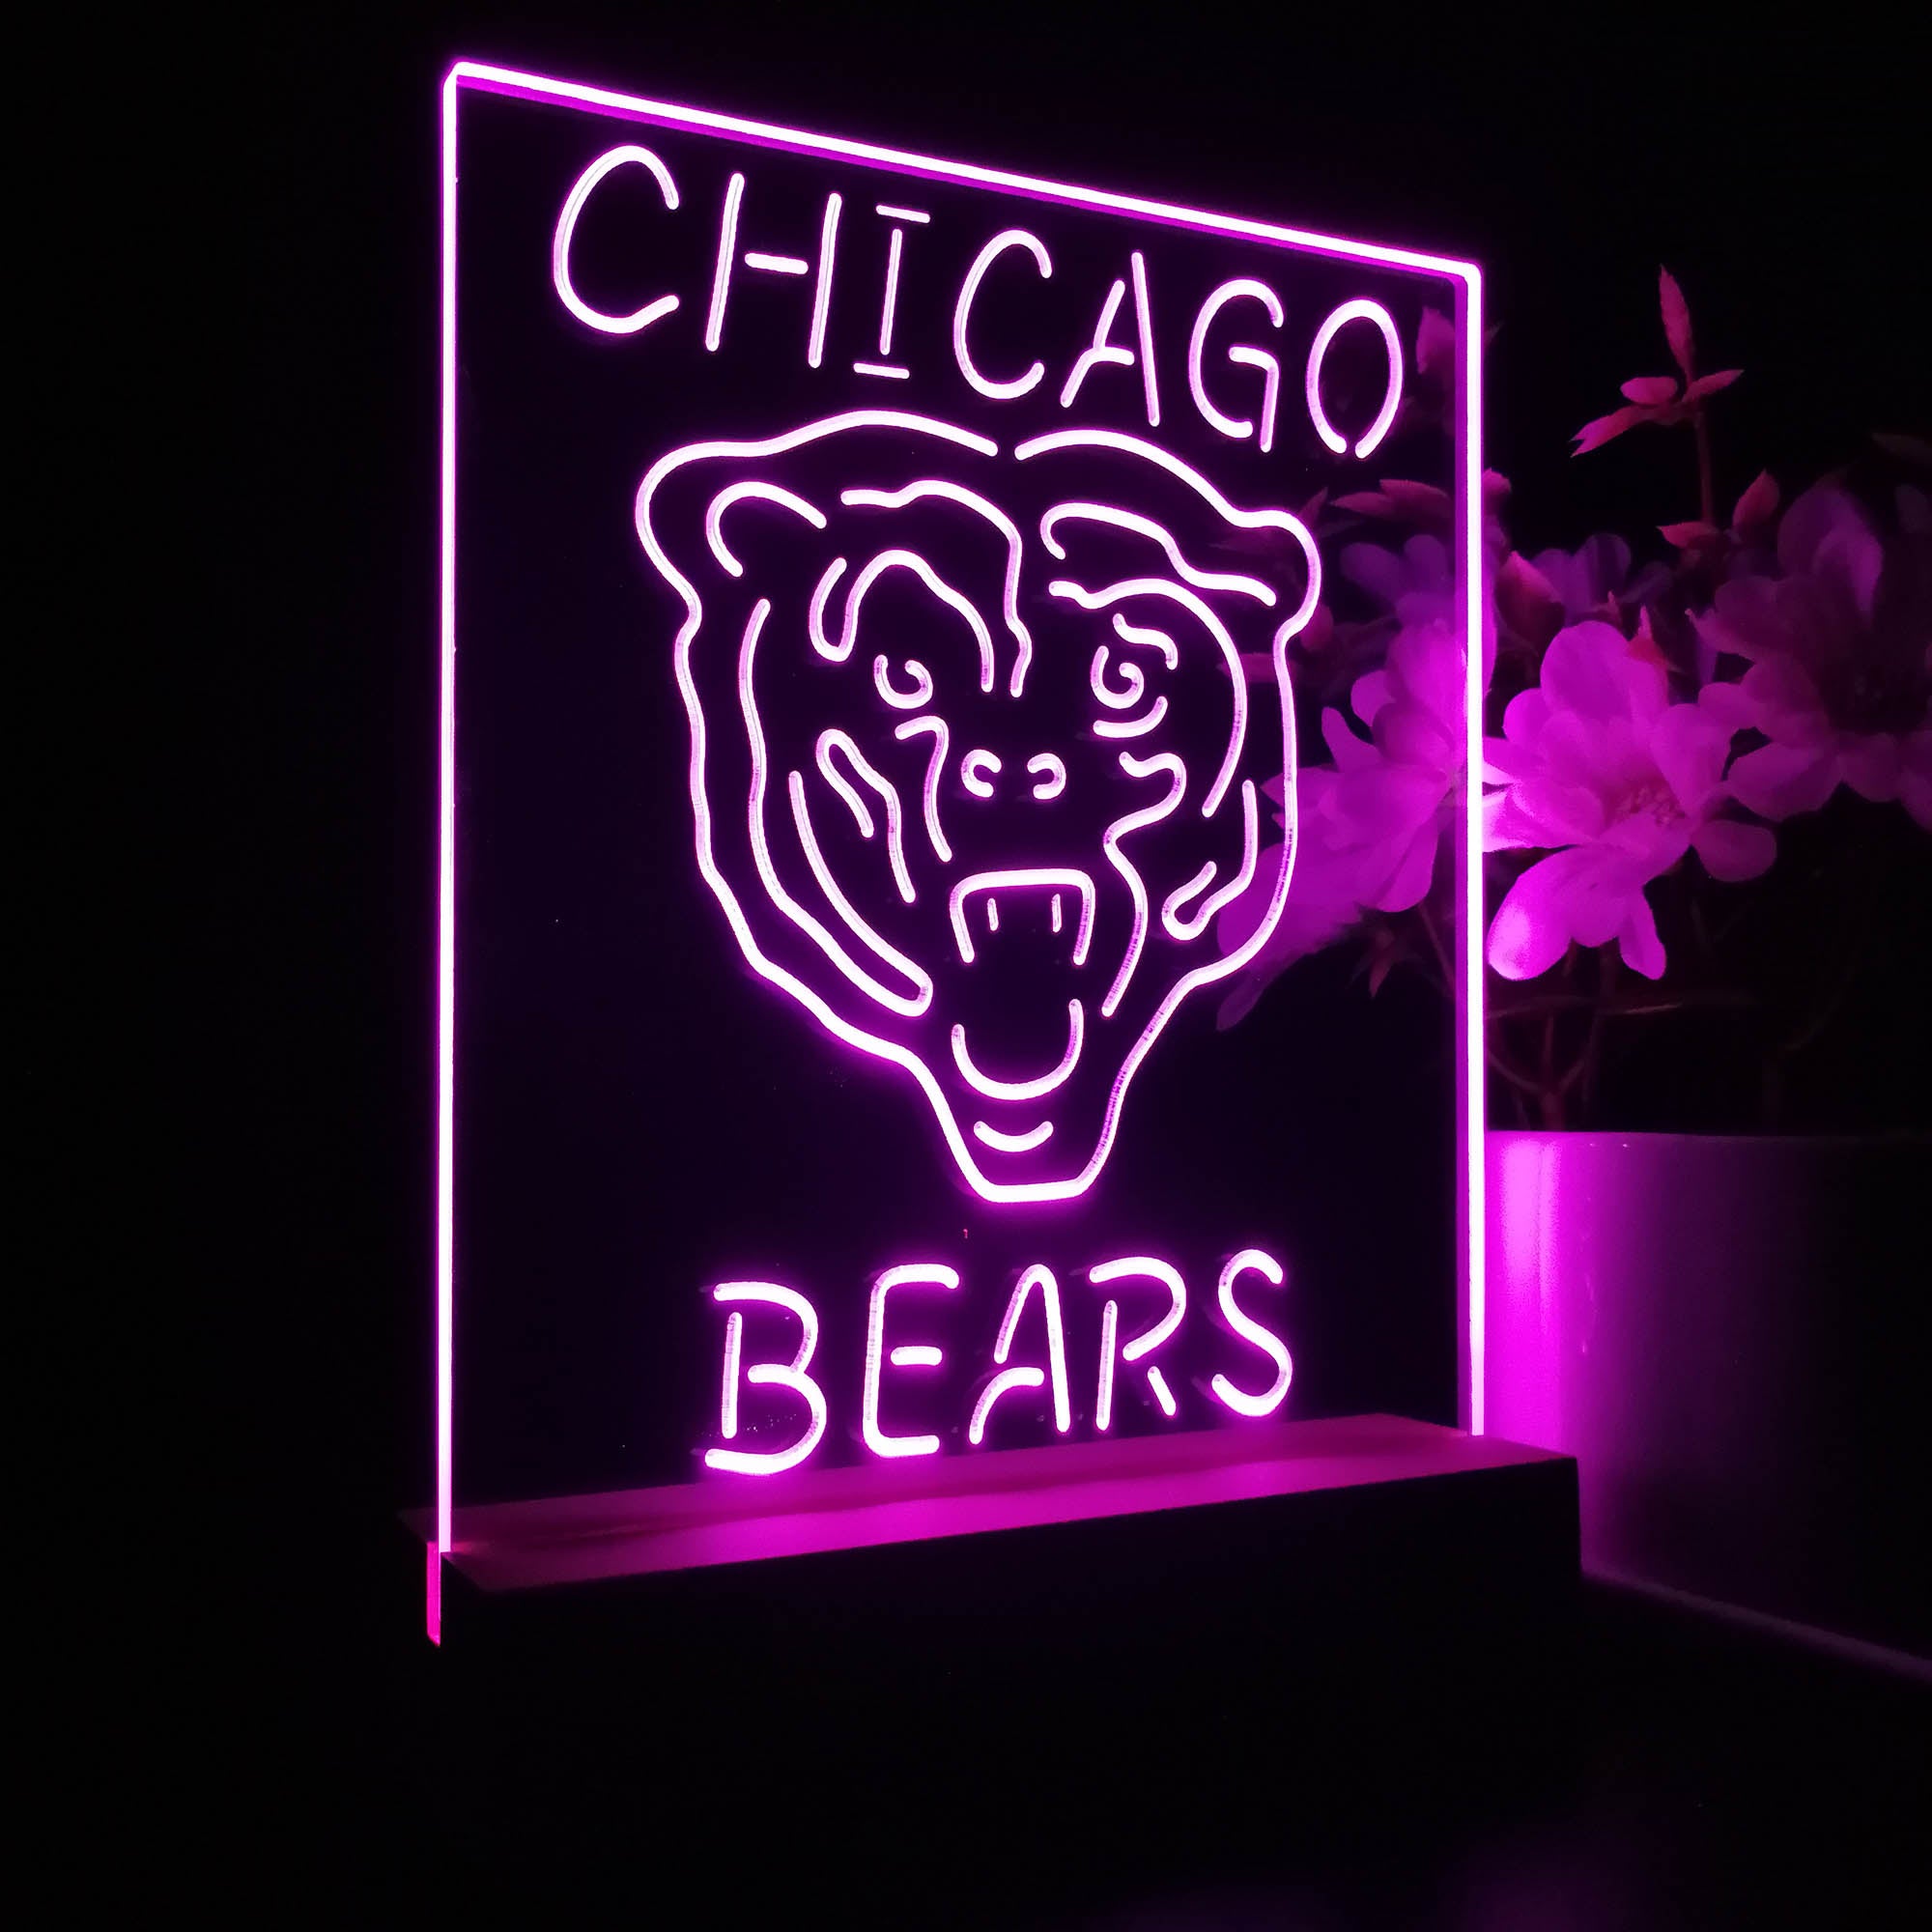 Chicago Bears Football Club 3D LED Optical Illusion Sport Team Night Light